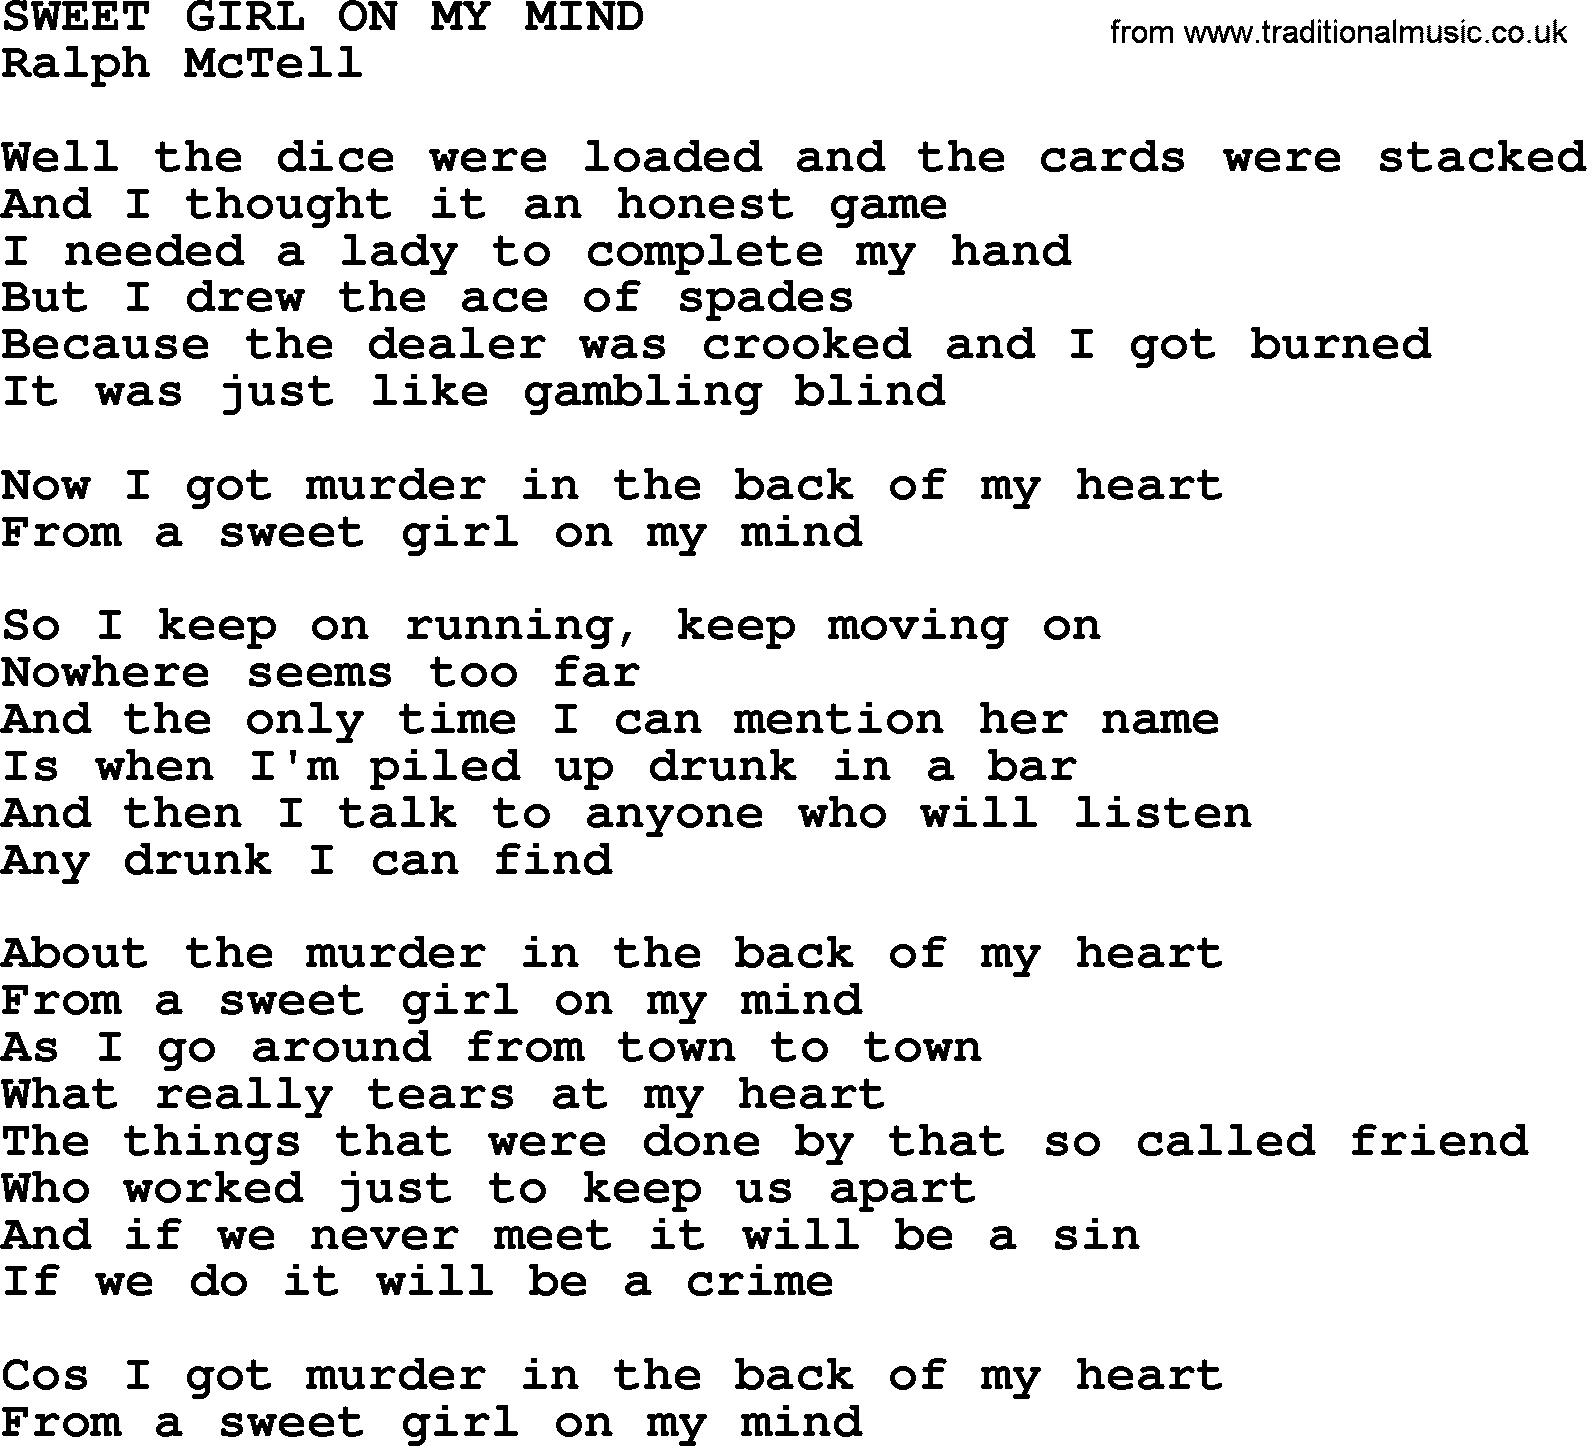 Ralph McTell Song: Sweet Girl On My Mind, lyrics